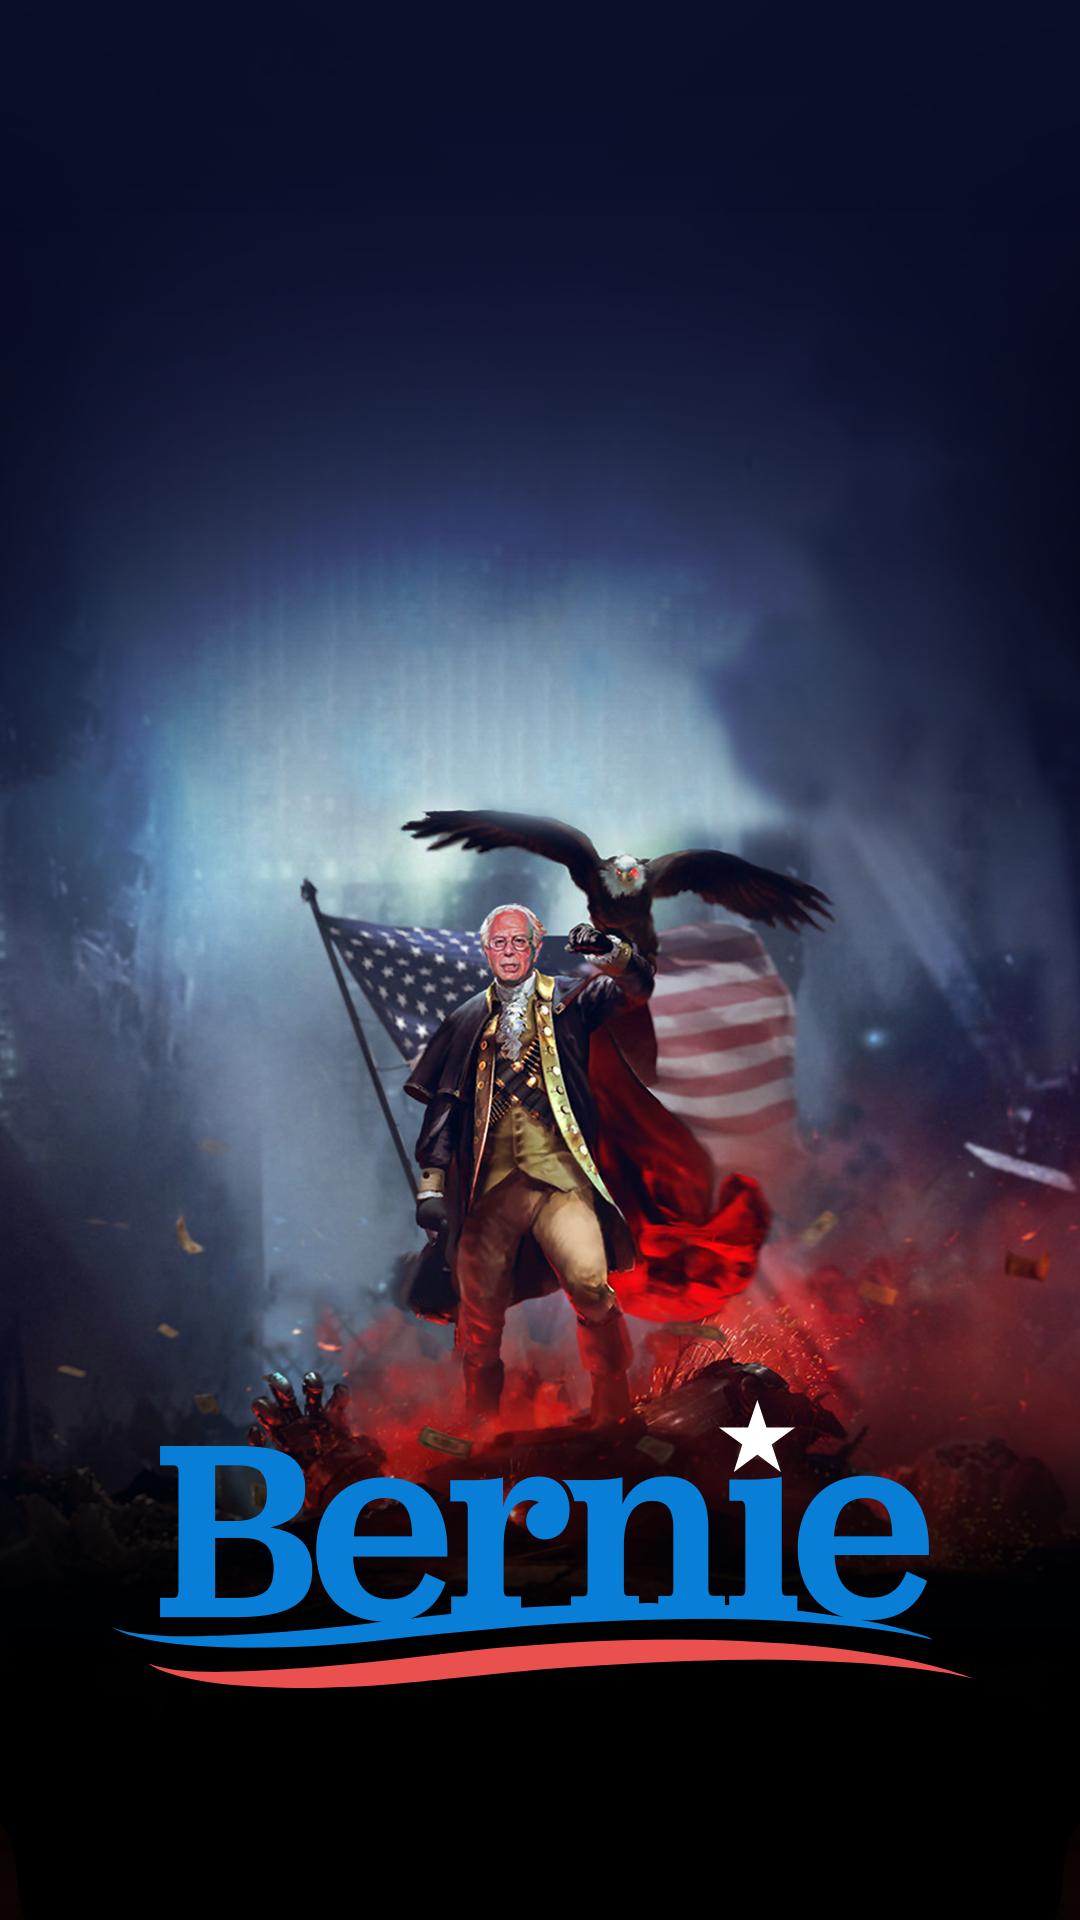 Bernie Sanders For President iPhone Plus HD Wallpaper